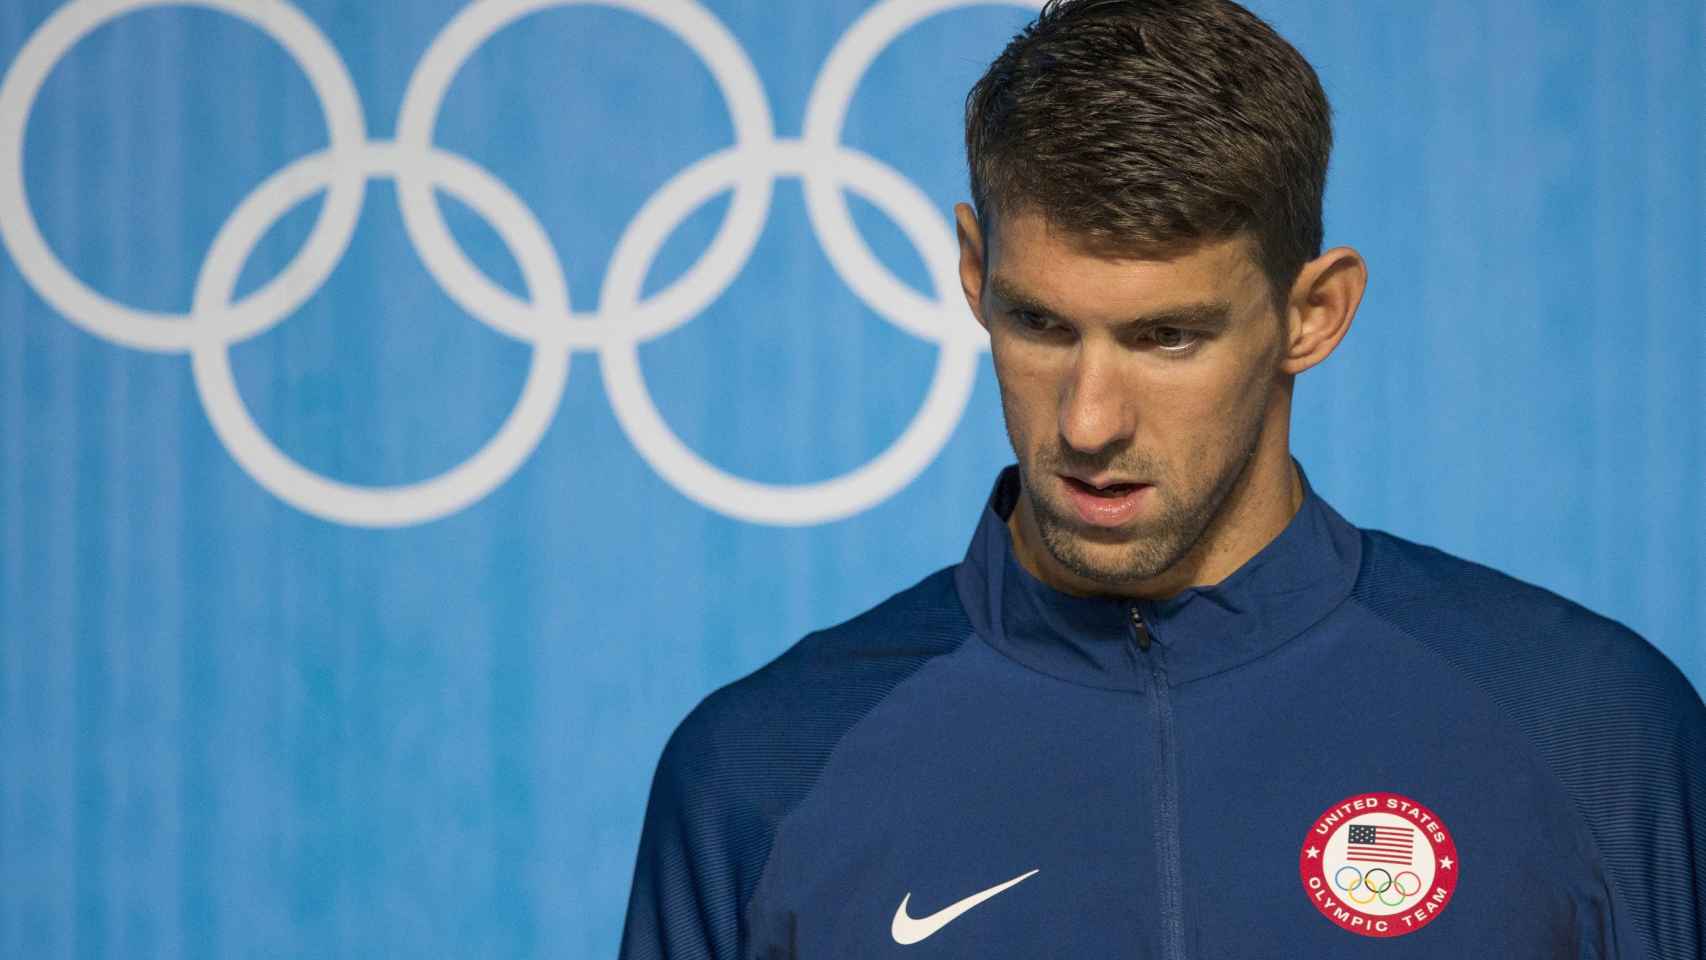 Michael Phelps. Estados Unidos. Natación.